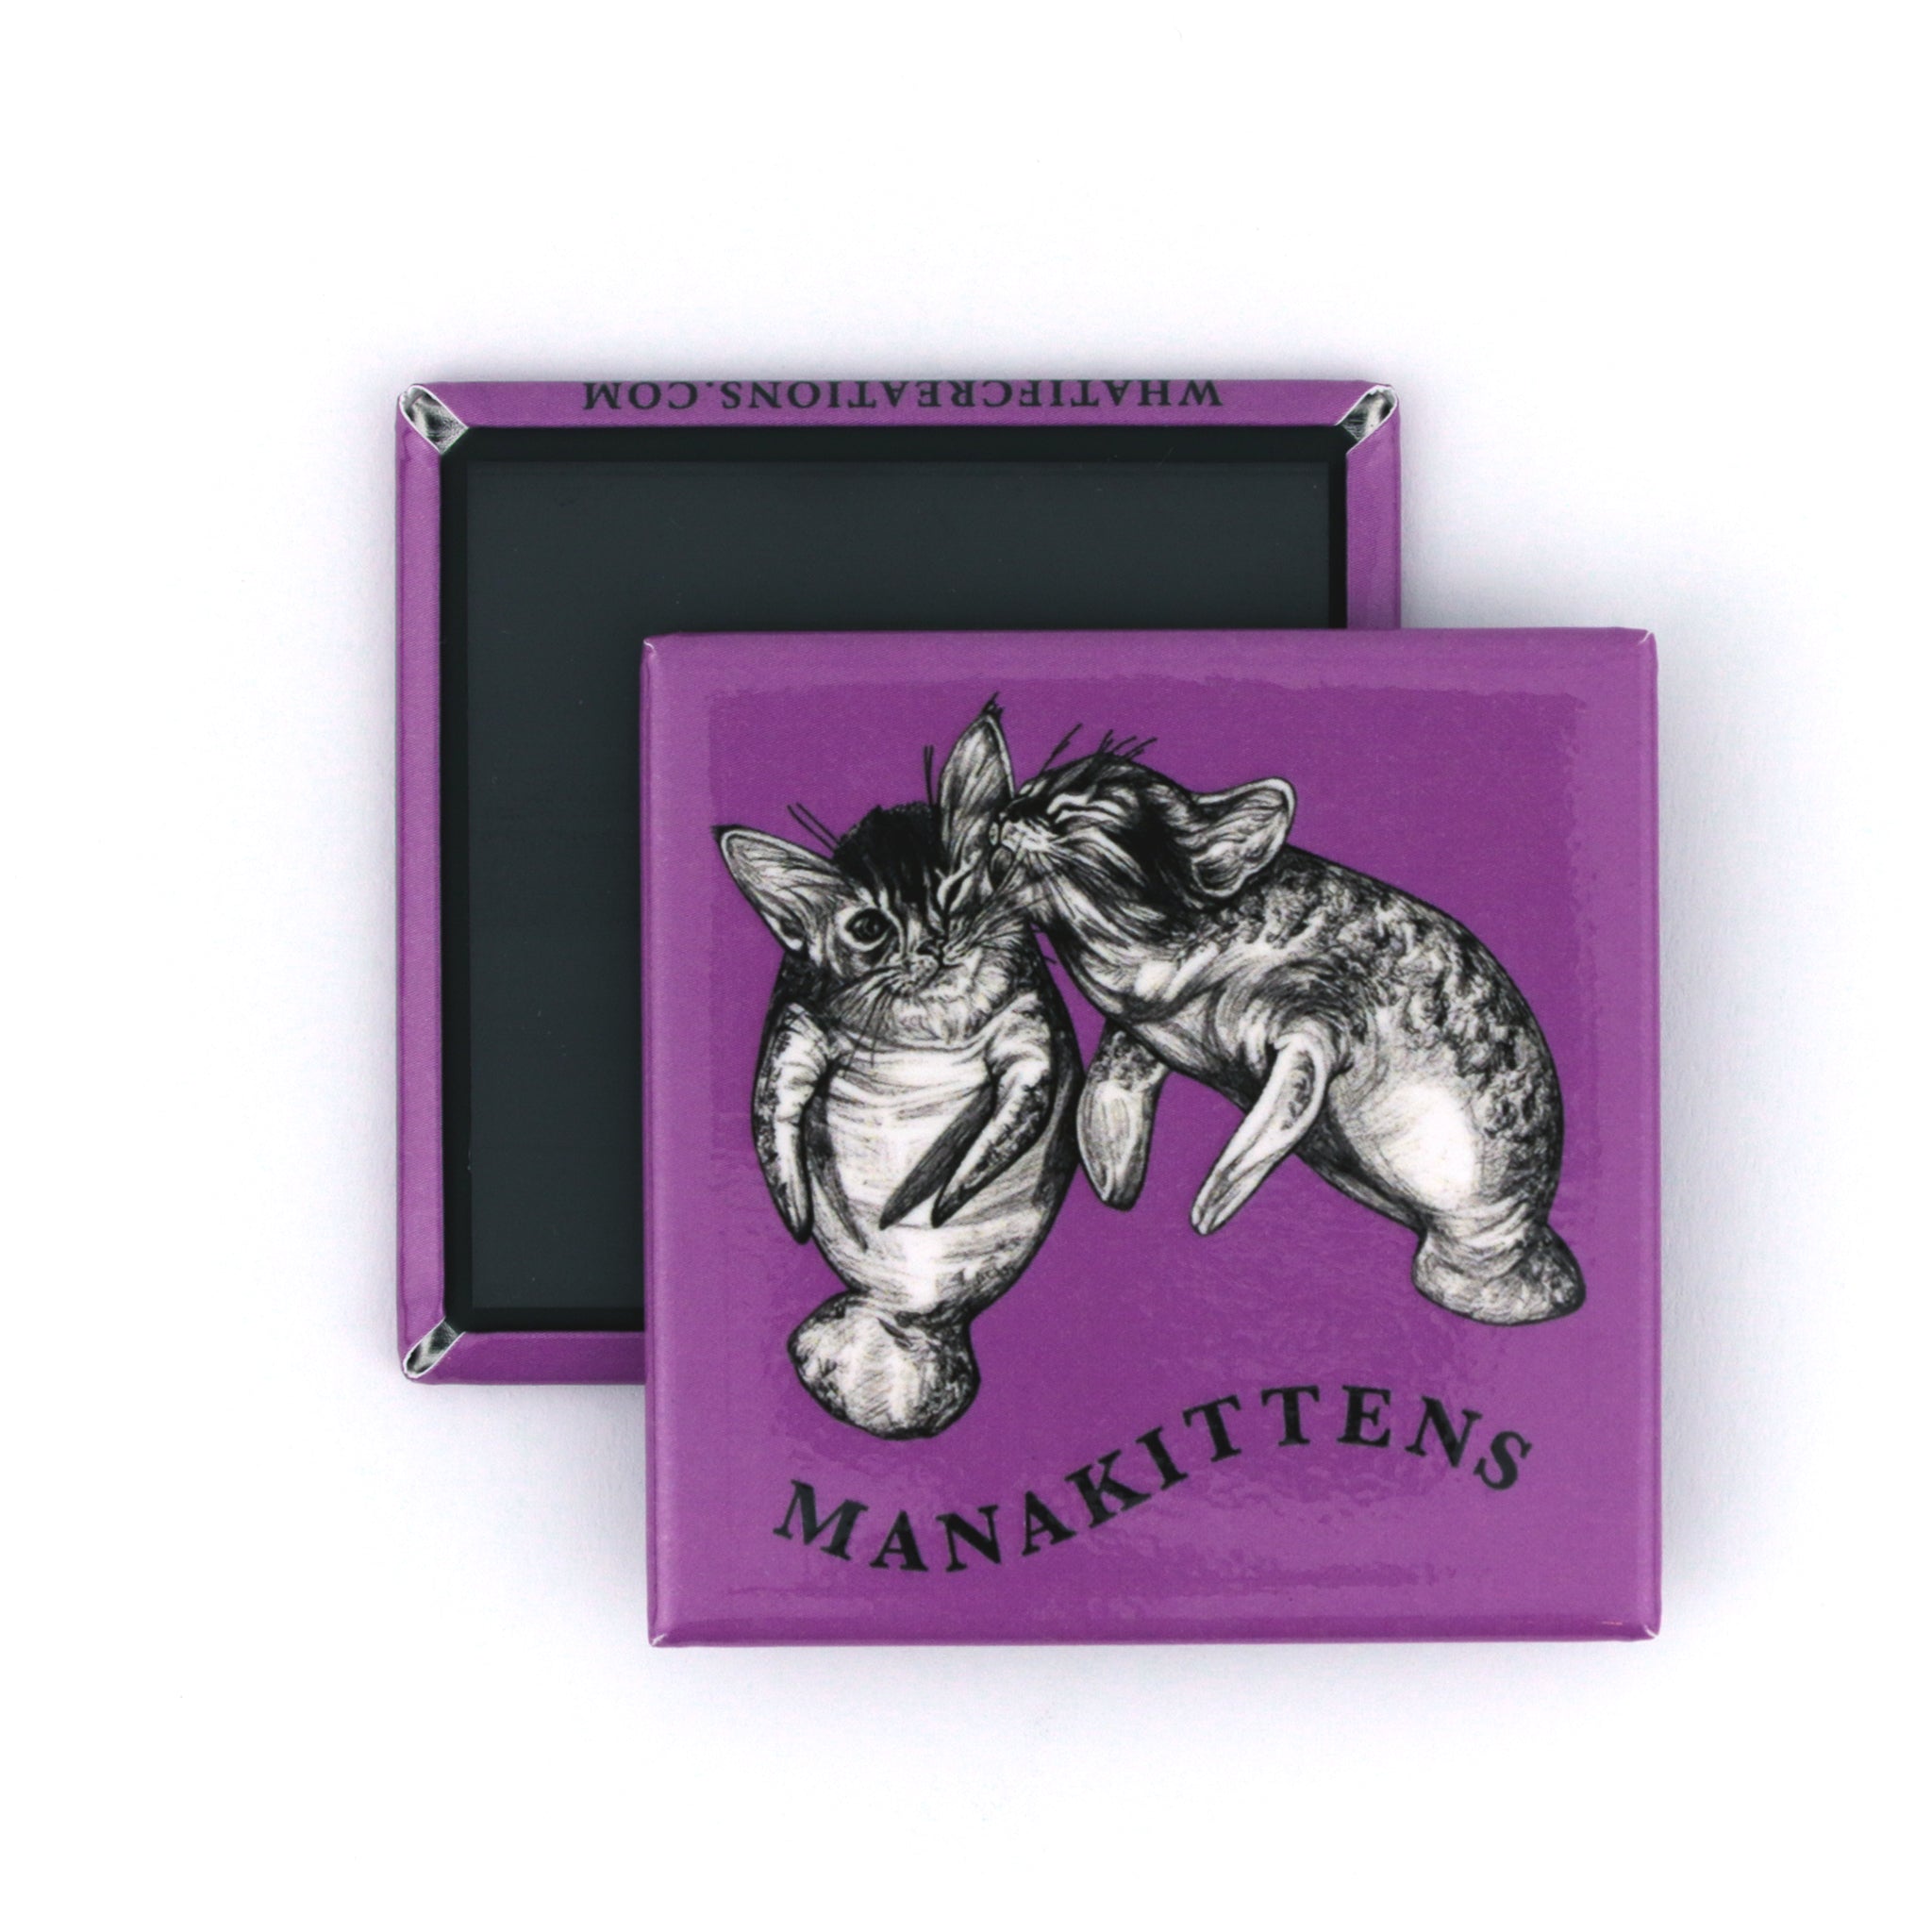 Manakittens | Manatee + Kitten Hybrid Animal | 2" Fridge Magnet